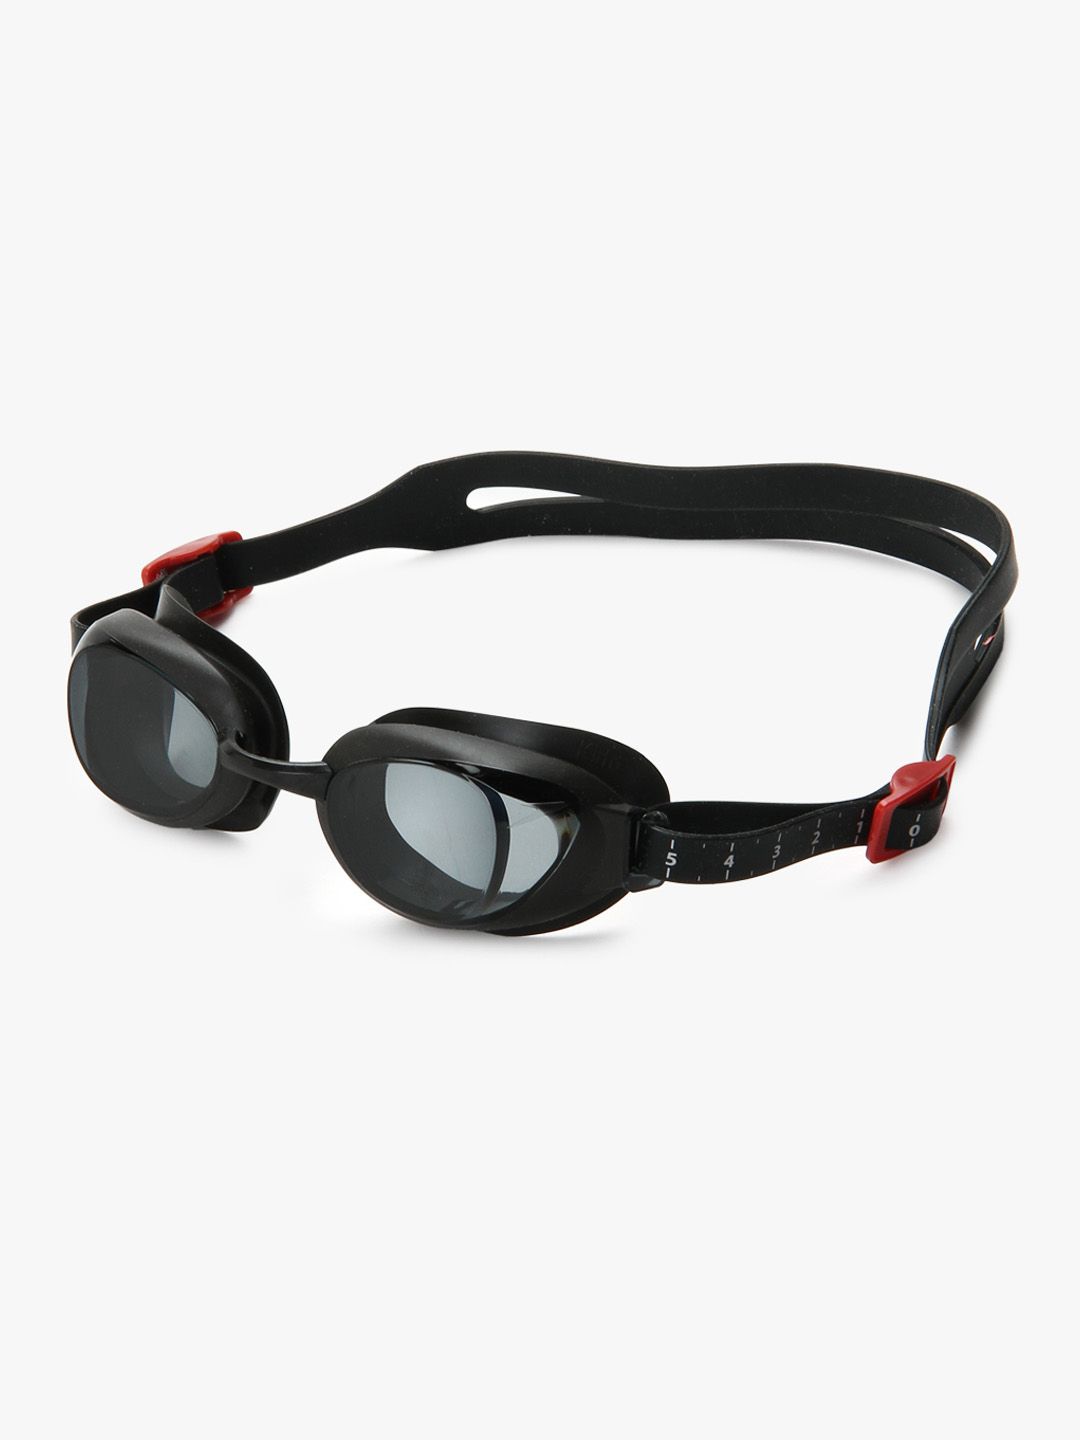 Speedo Unisex Black Swimming Goggles Price in India